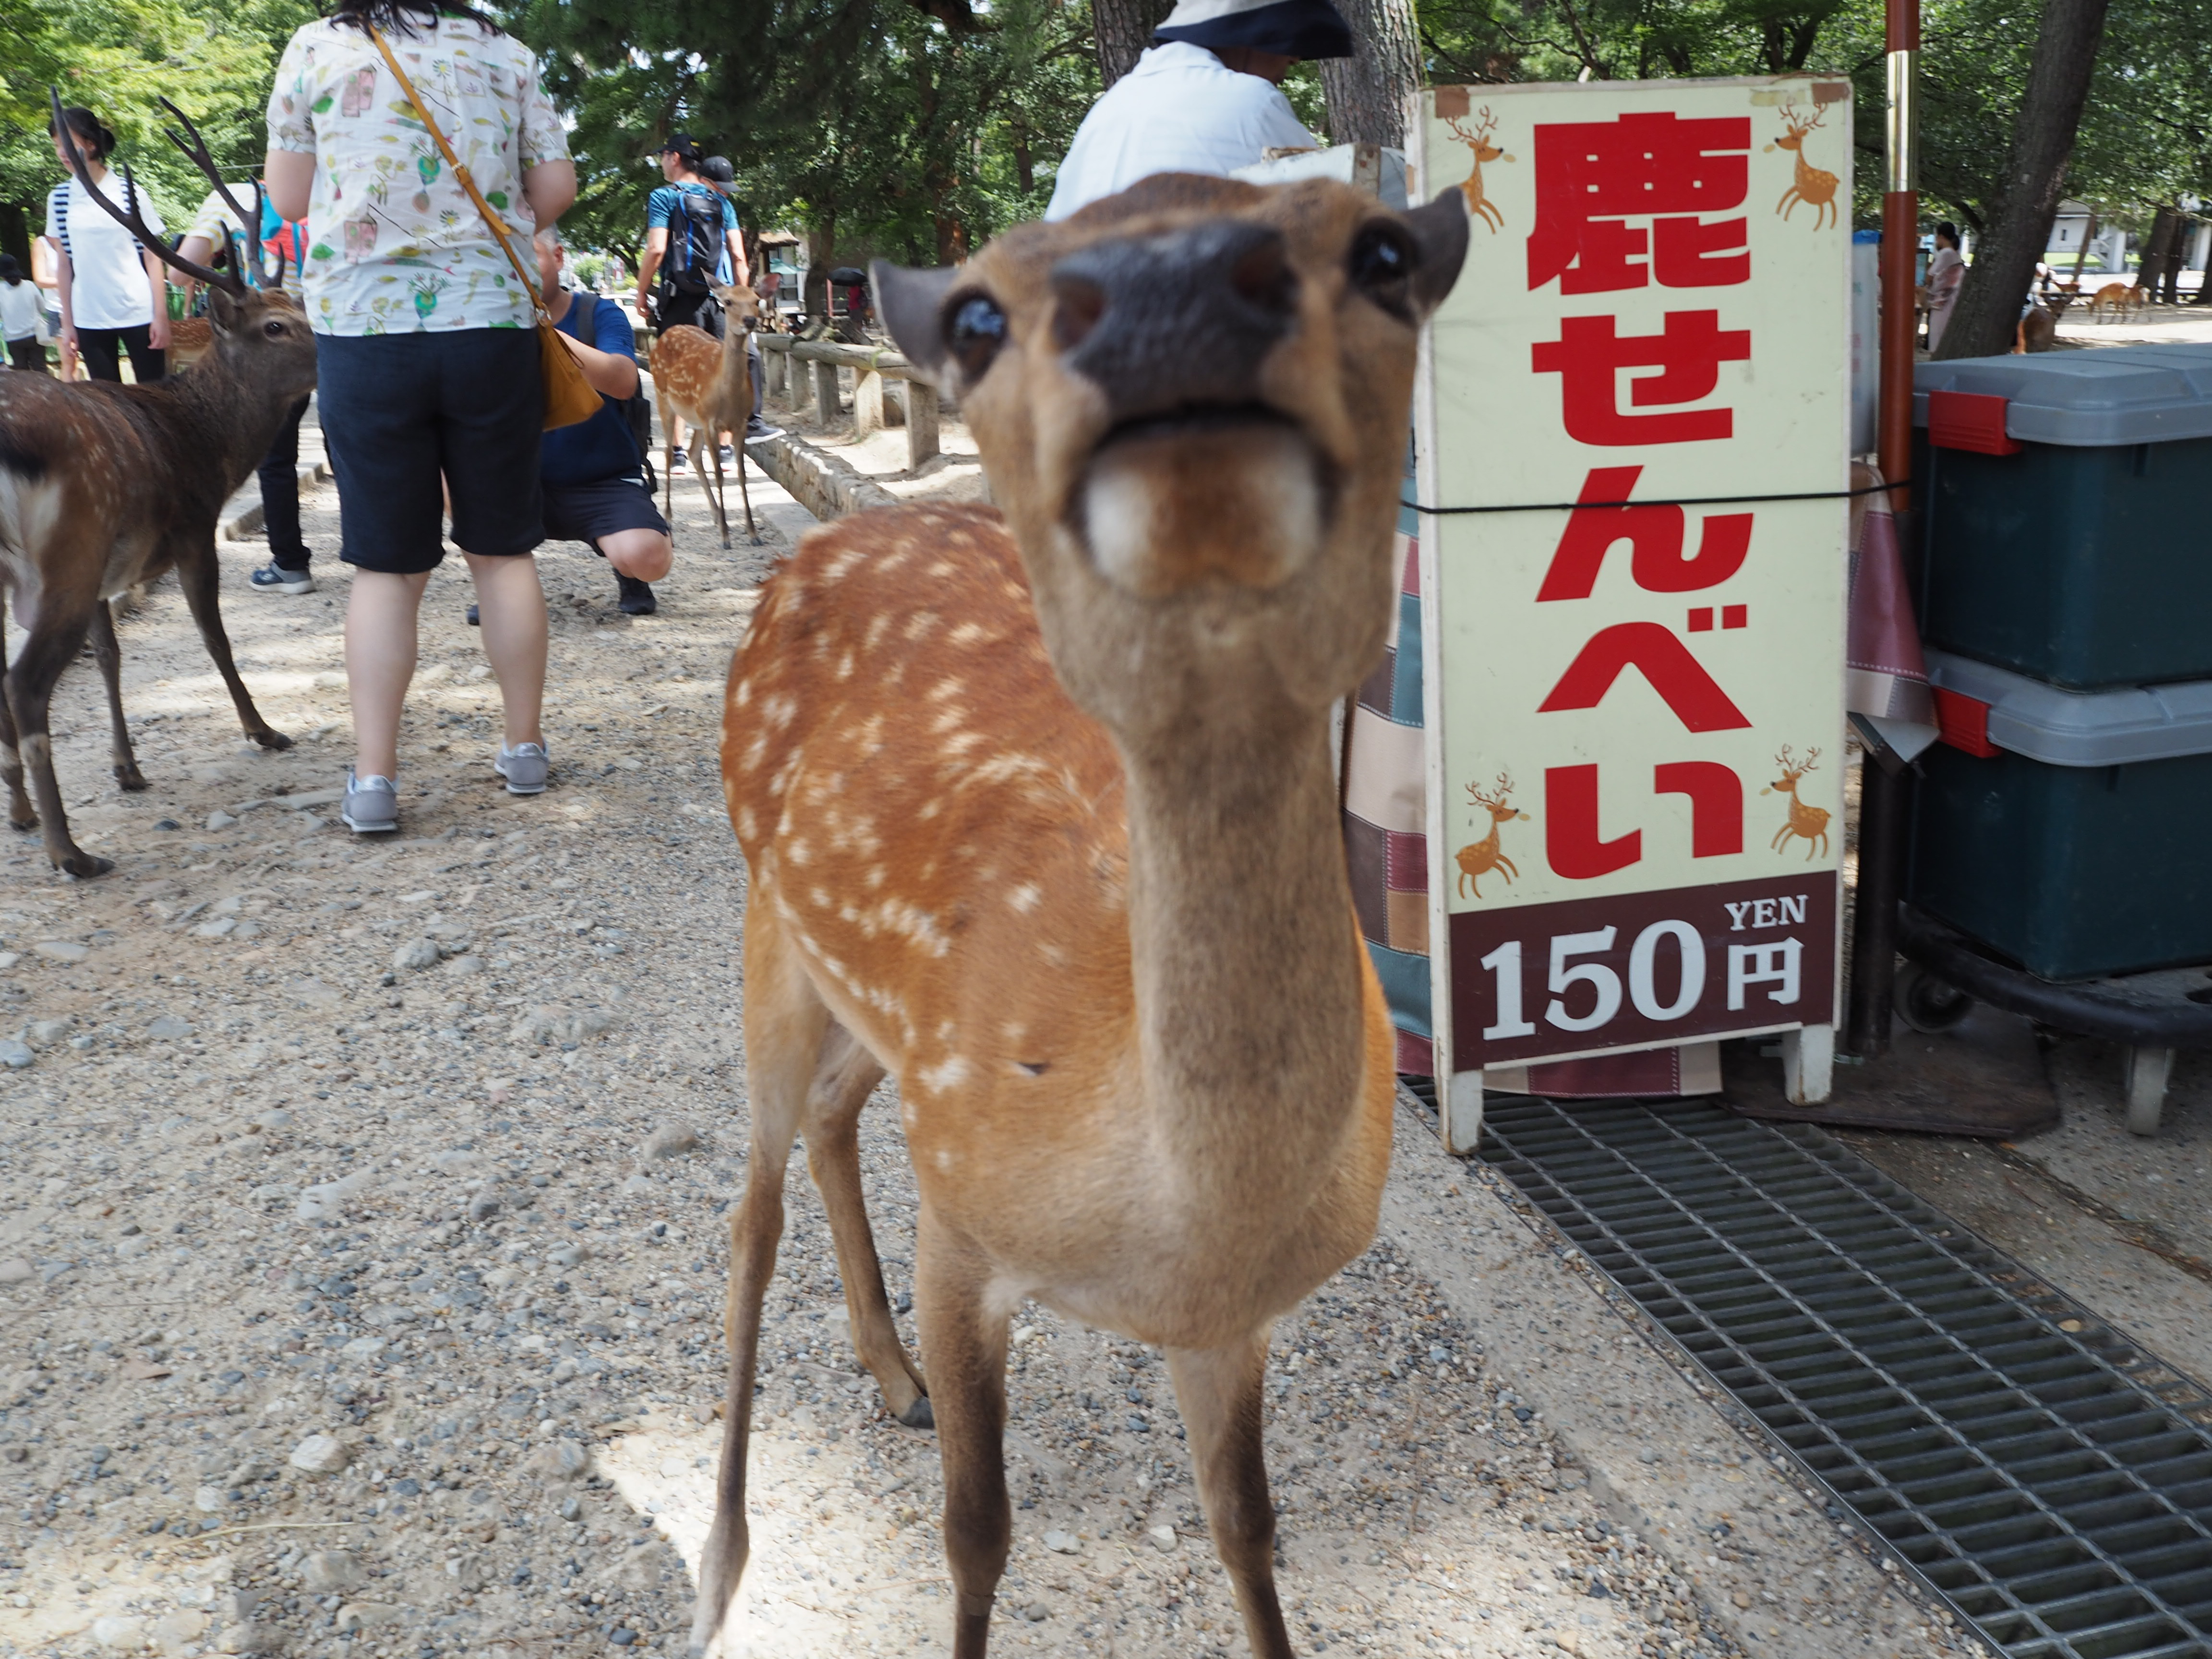 Ethical Animal Experiences Around Japan 1 - Savvy Tokyo